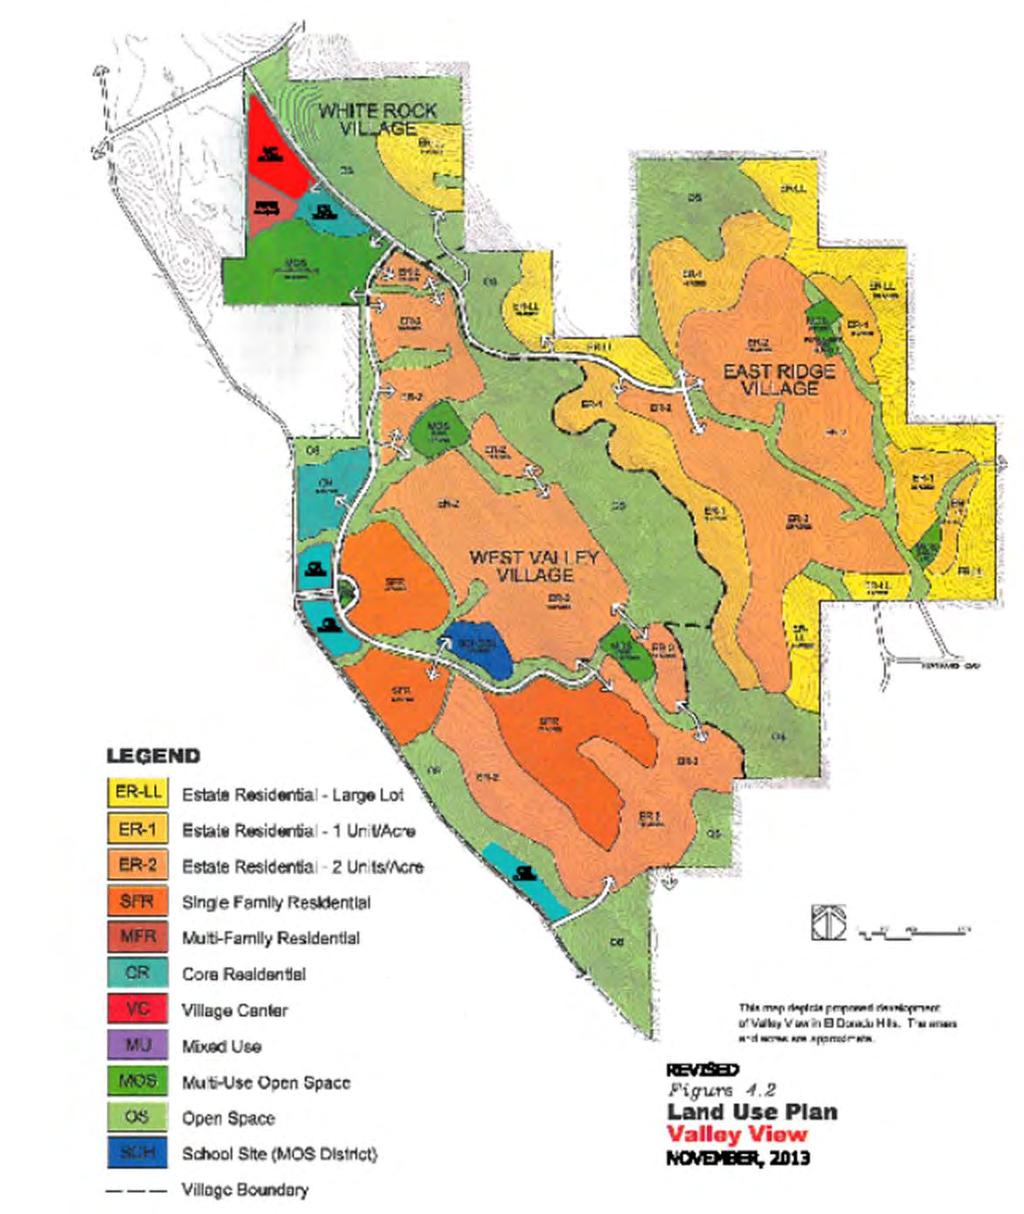 Source: El Dorado County Planning Department A description of each of the allowable land use